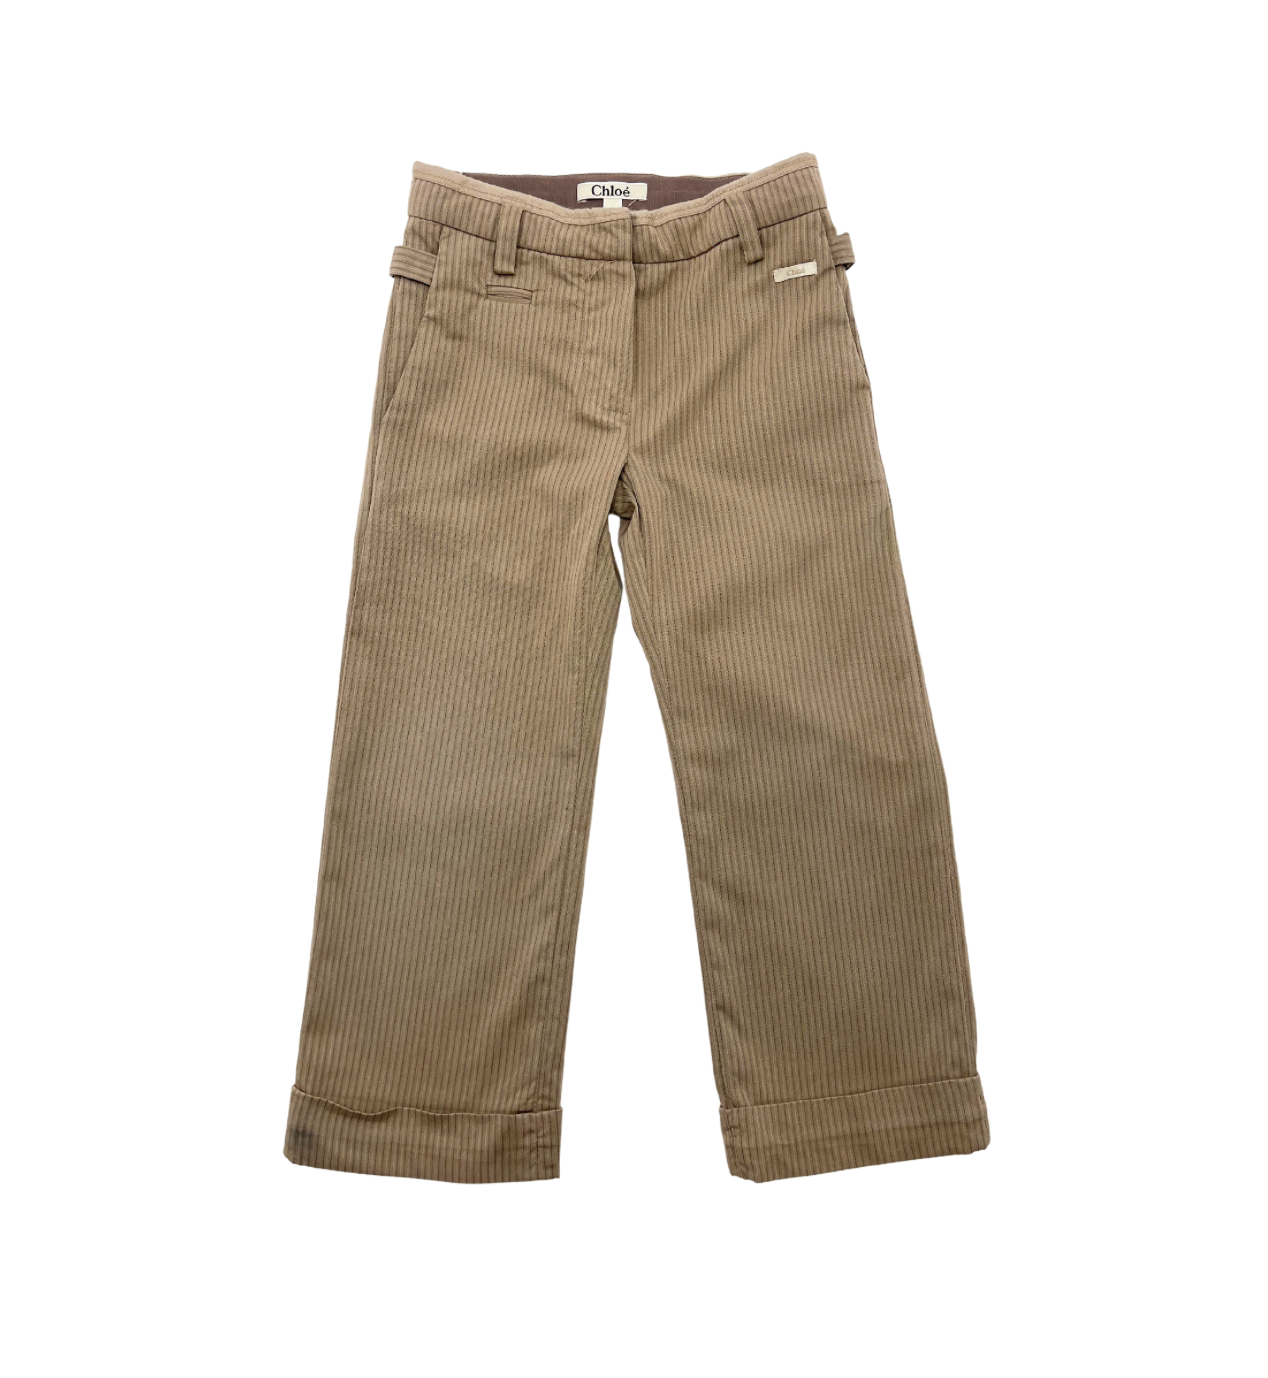 CHLOÉ - Pantalon marron à rayures - 4 ans